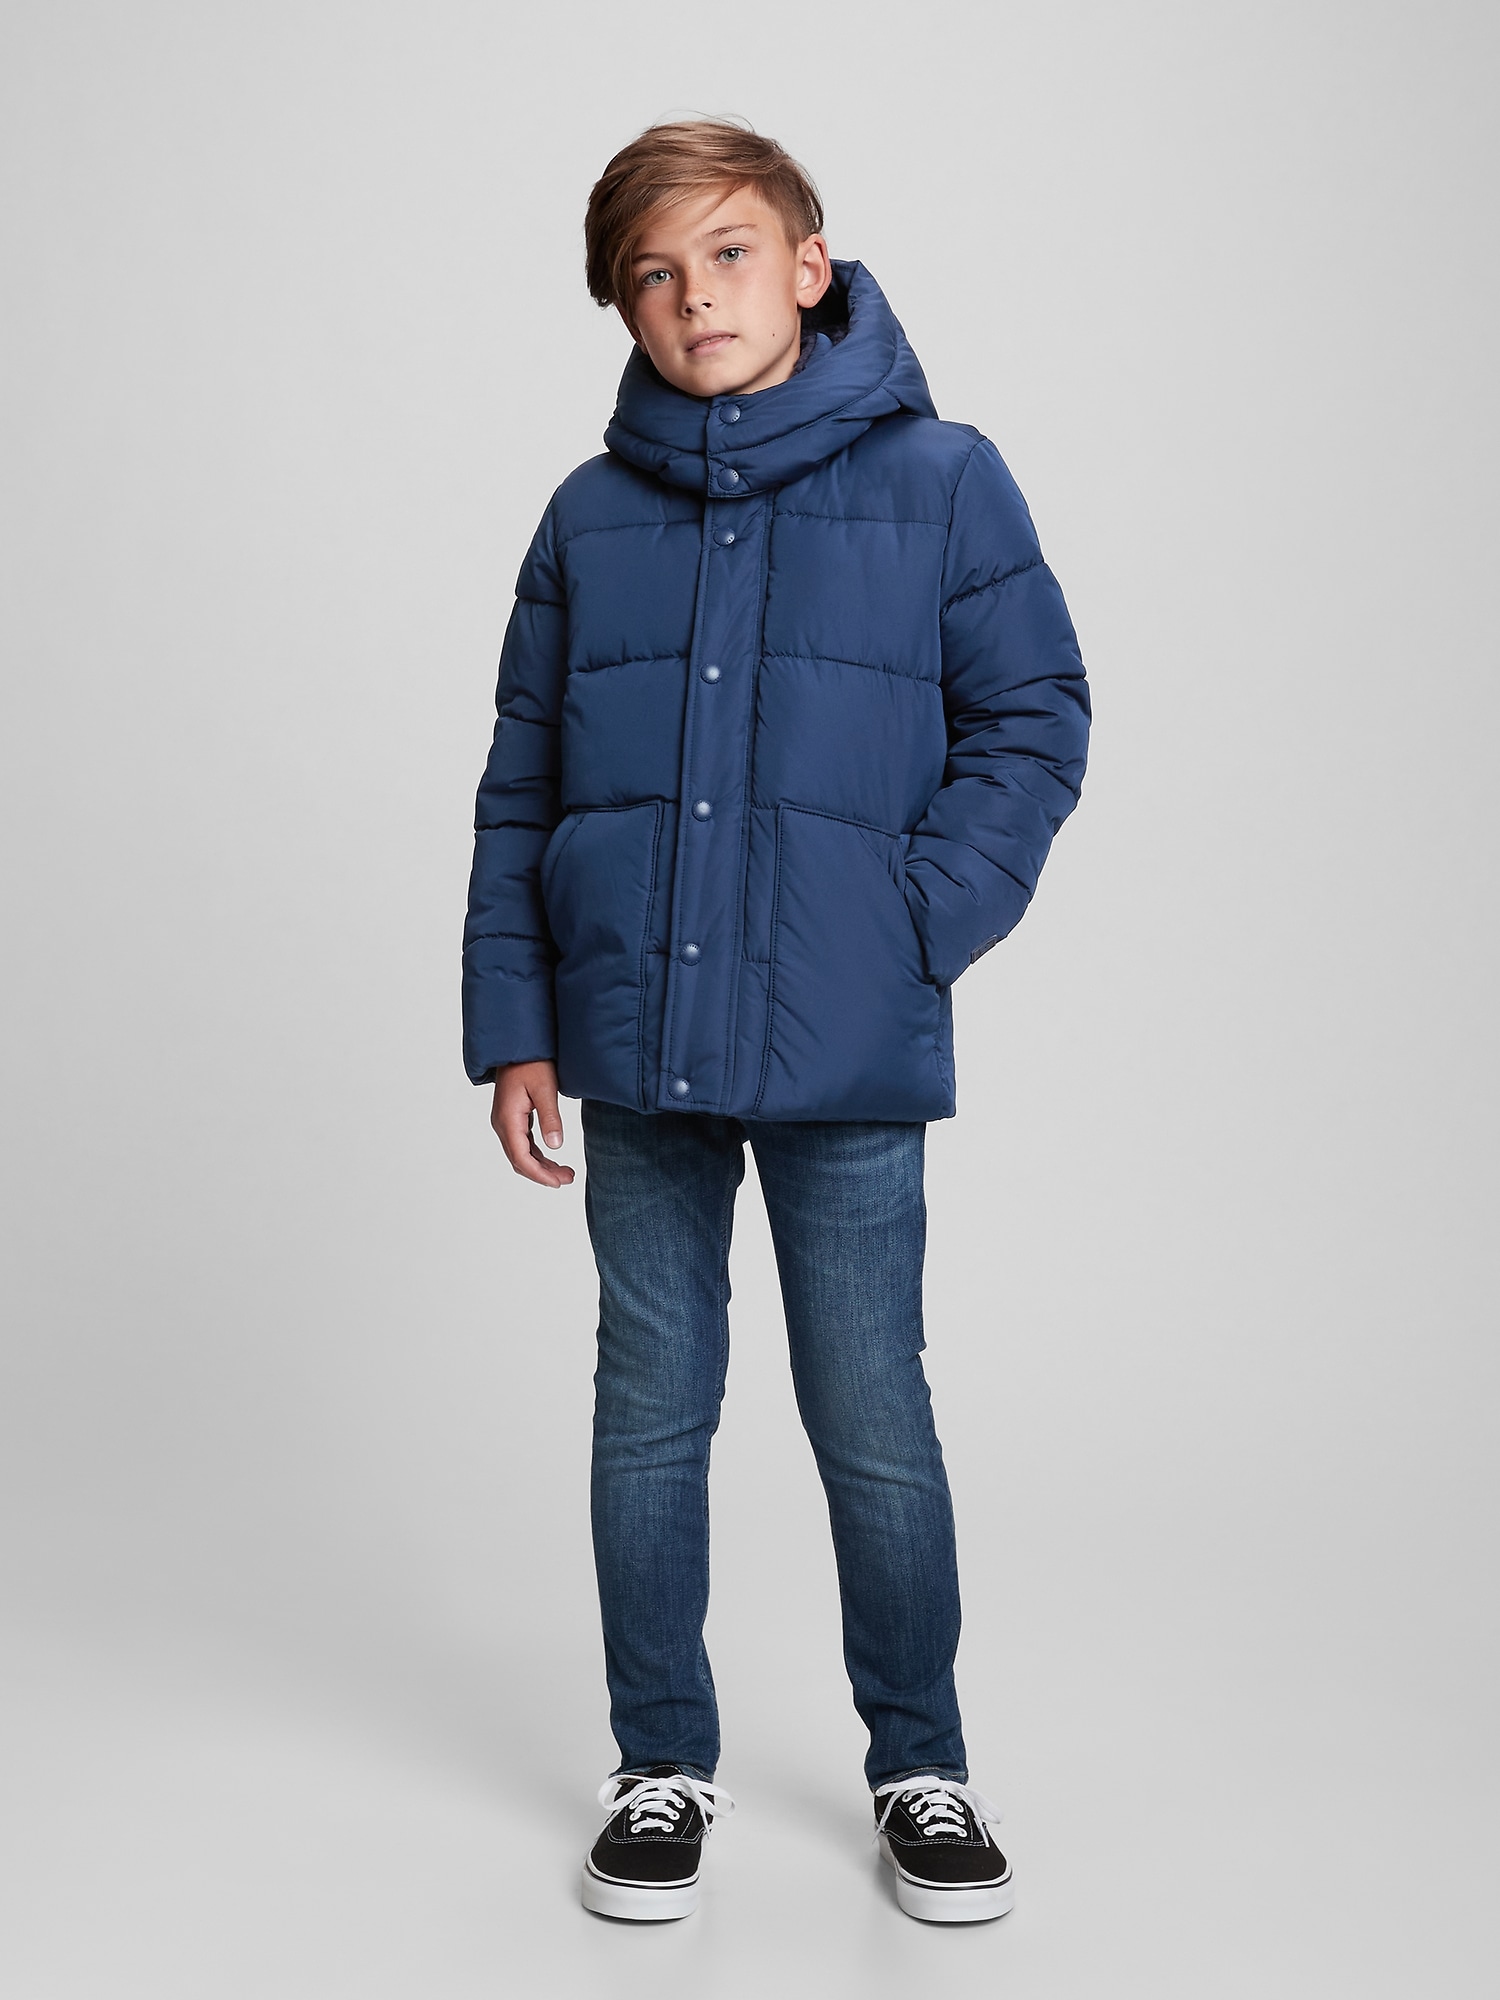 Kids ColdControl Max Puffer Jacket | Gap